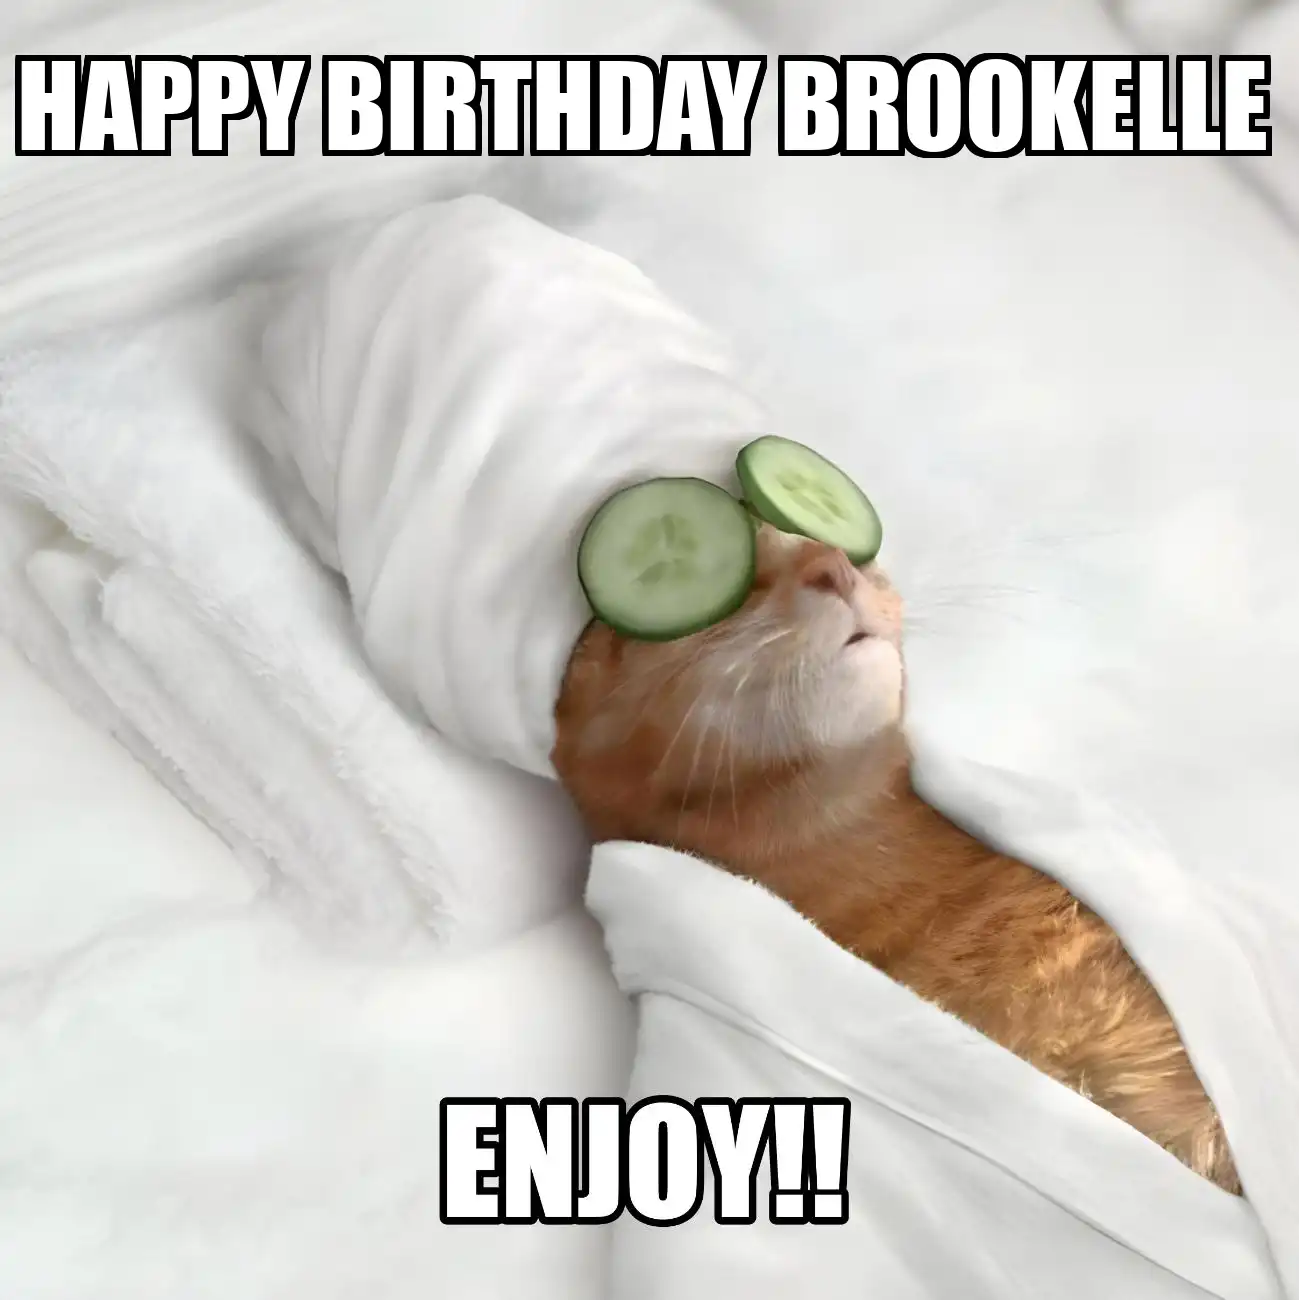 Happy Birthday Brookelle Enjoy Cat Meme